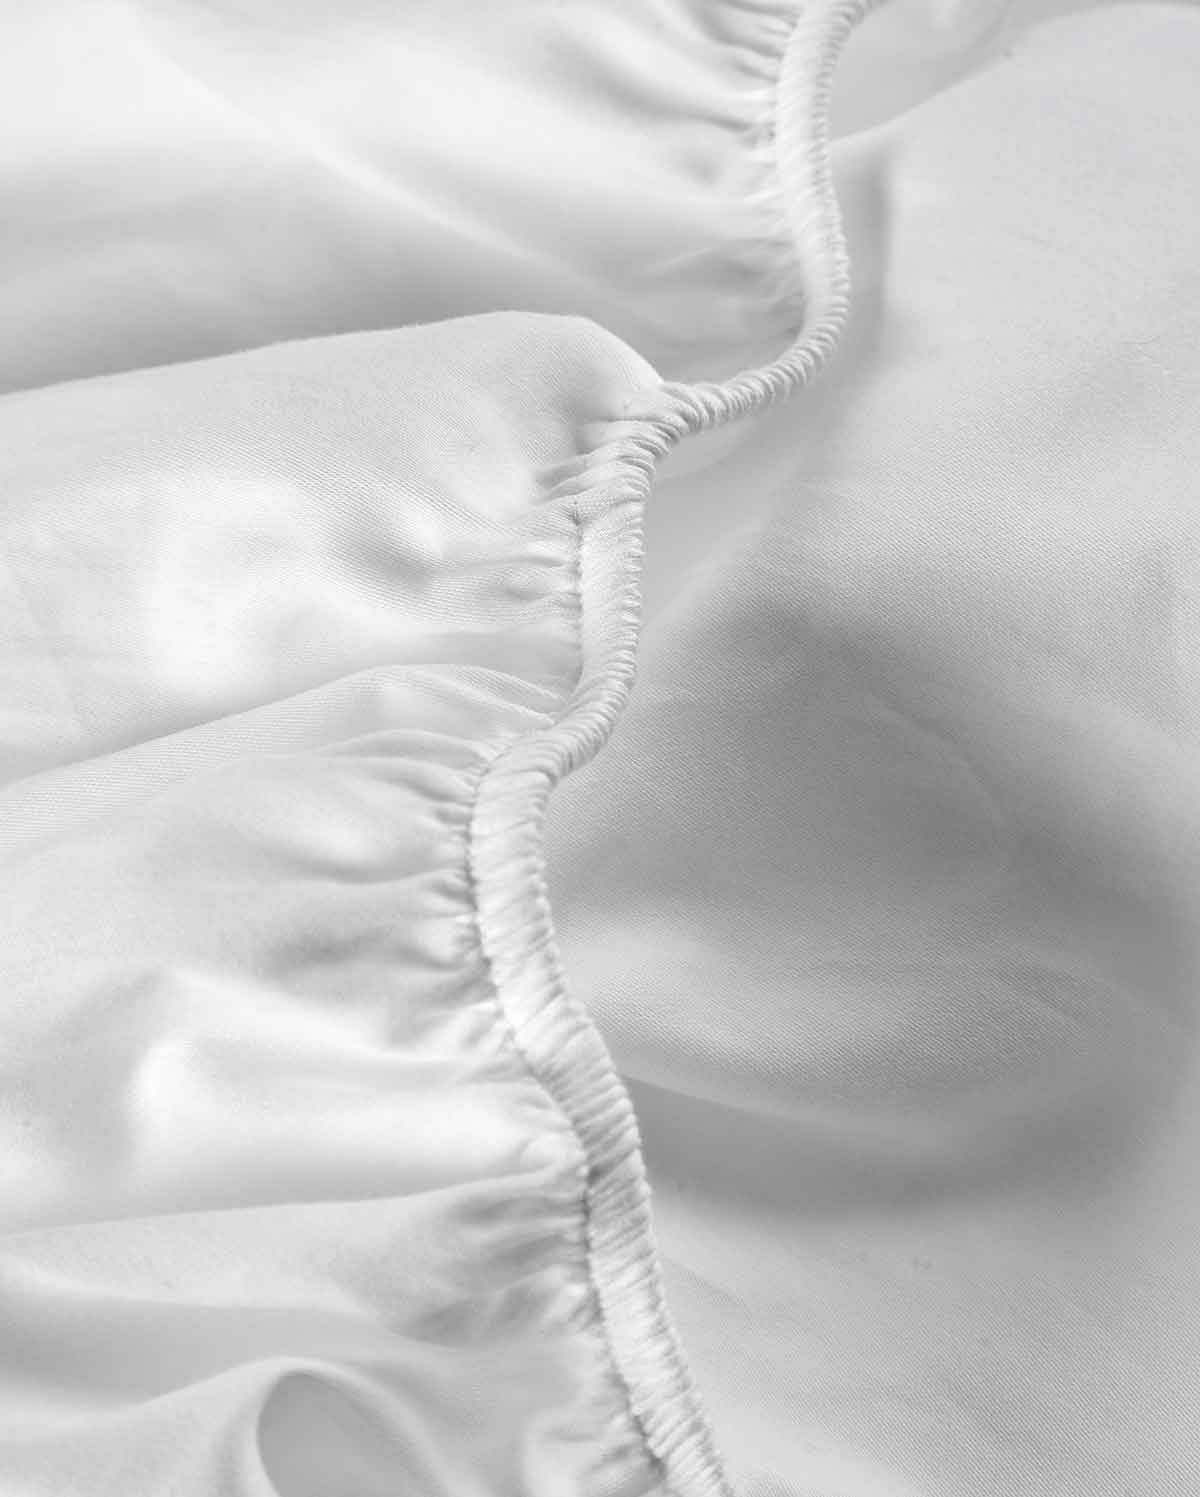 Sateen Stripe - Core Bedding Set - Dark Grey & White